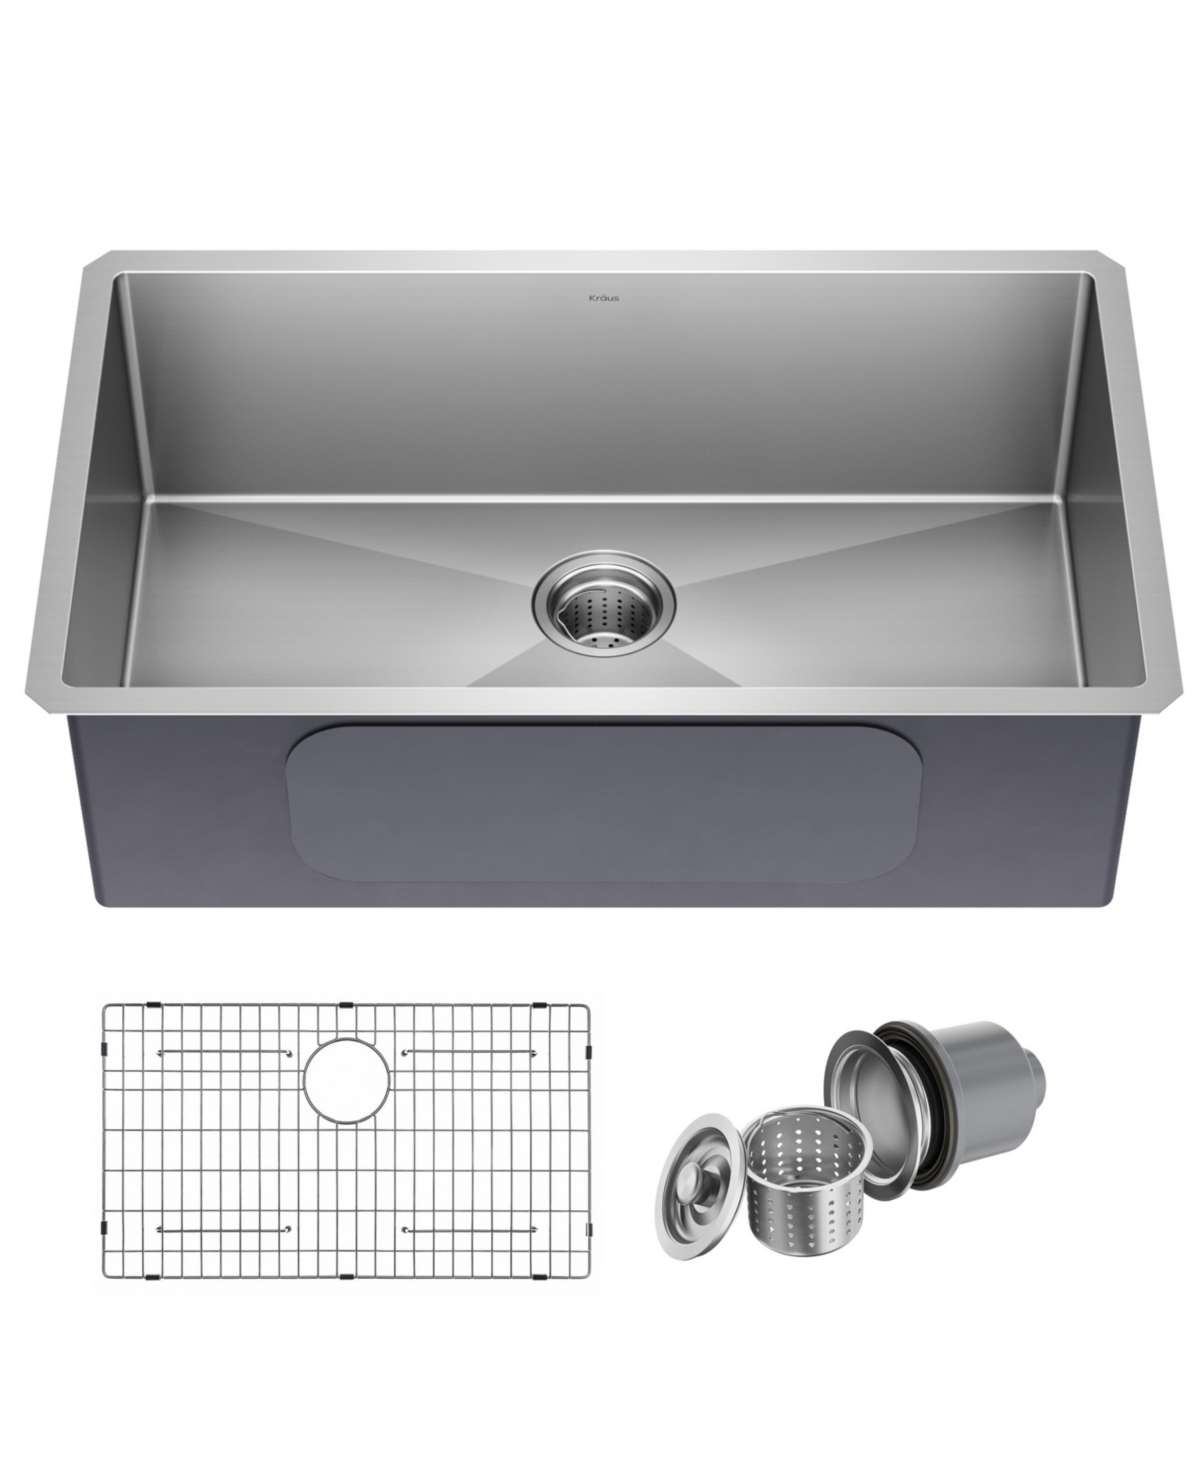 Standart Pro 32 in. 16 Gauge Undermount Single Bowl Stainless Steel Kitchen Sink - Stainless steel